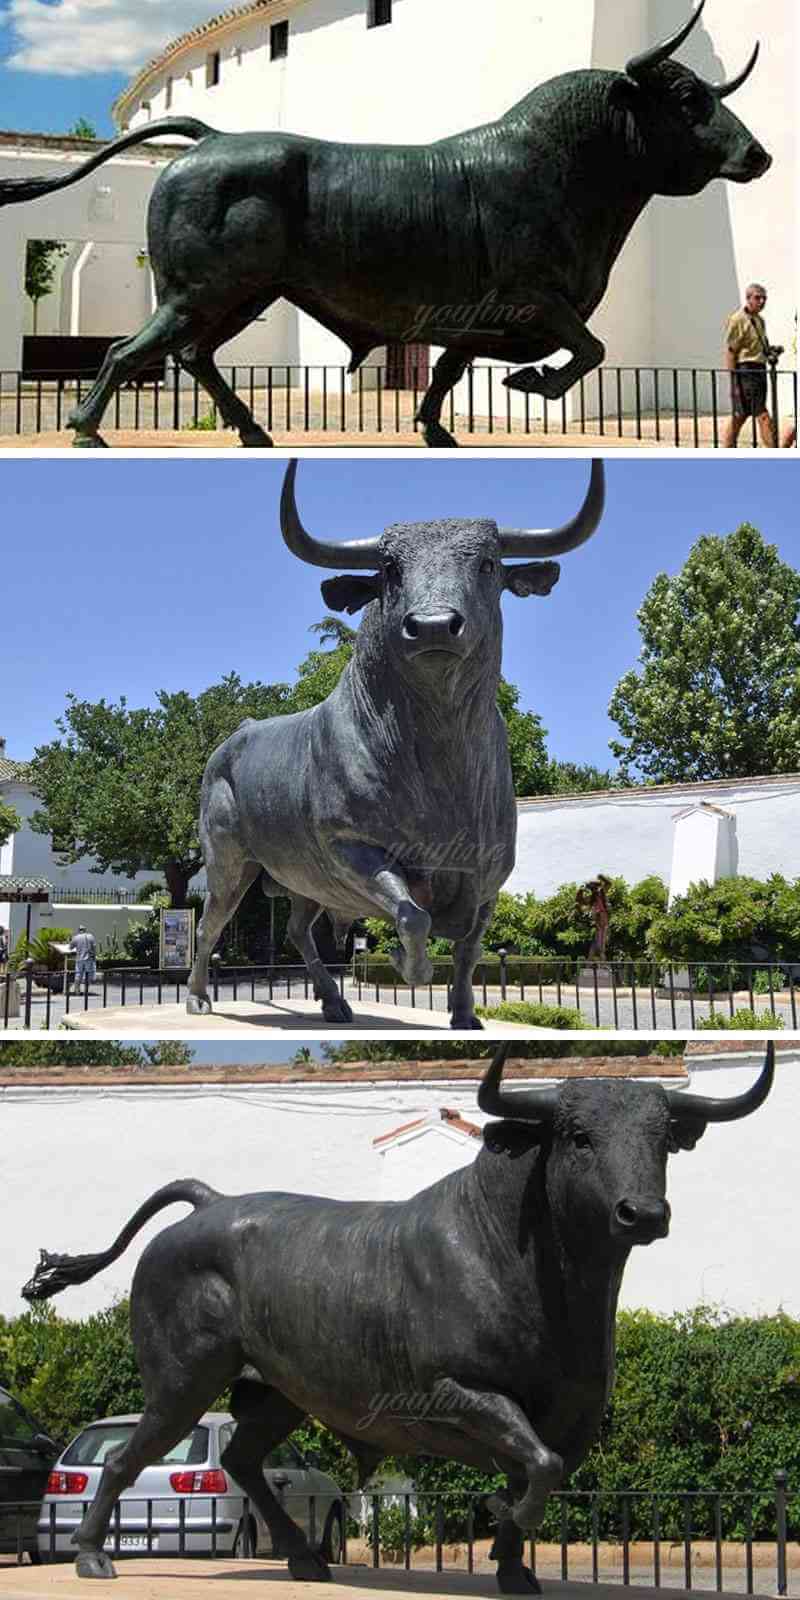 BOKK-61 Large bronze charging bull sculpture outside for sale